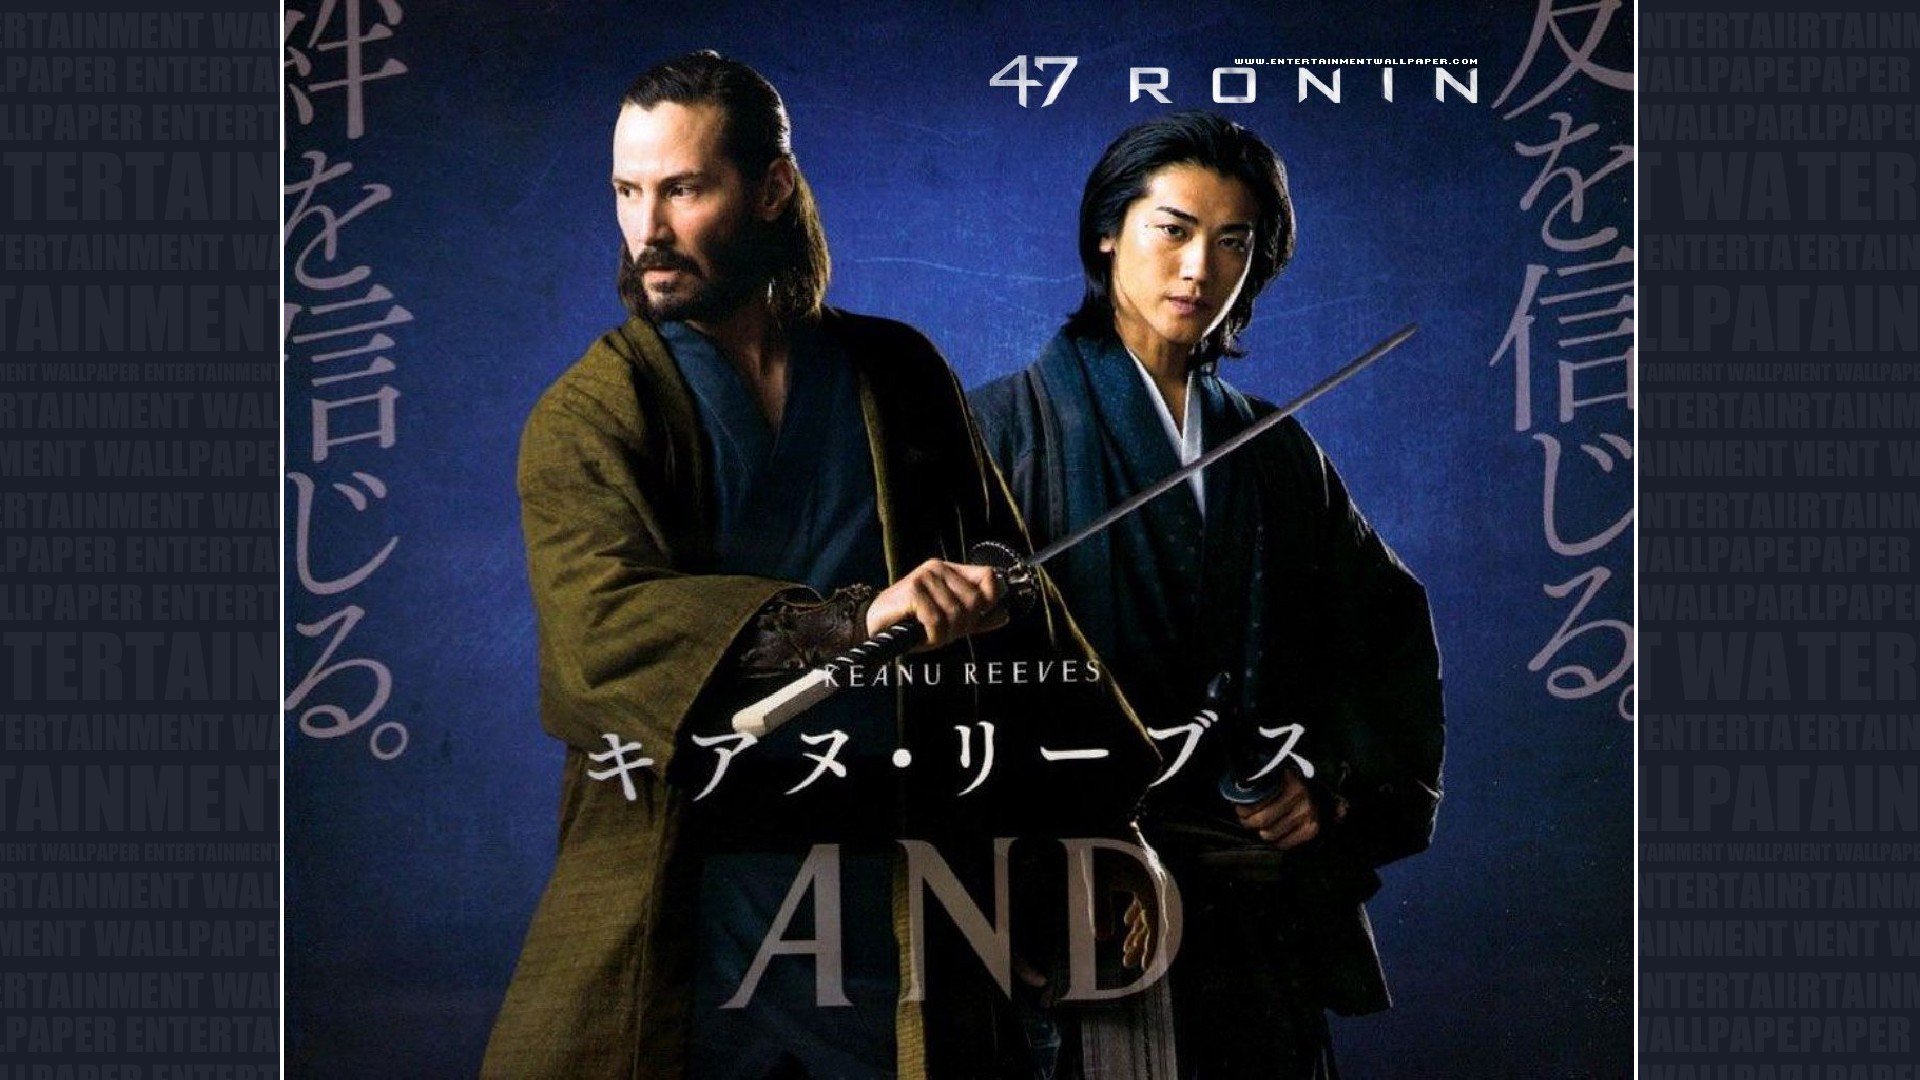 47 ronin, Action, Adventure, Fantasy, Martial, Arts, Ronin, Samurai, Warrior Wallpaper